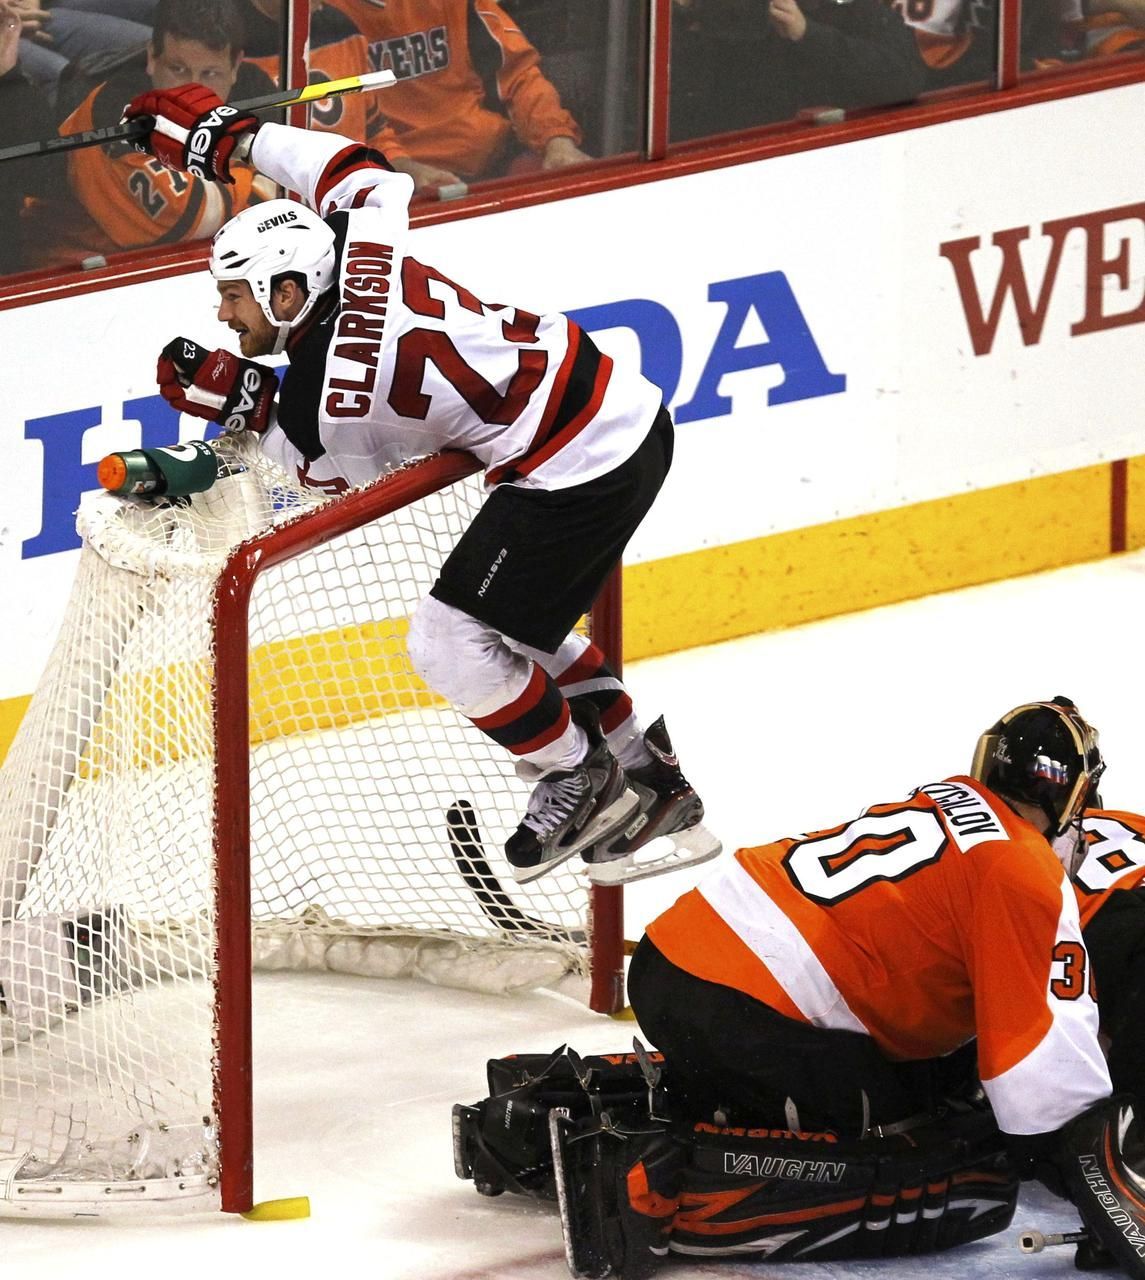 Stanley Cup, 2. kolo play-off: Flyers vs. Devils (David Clarkson, oslava)